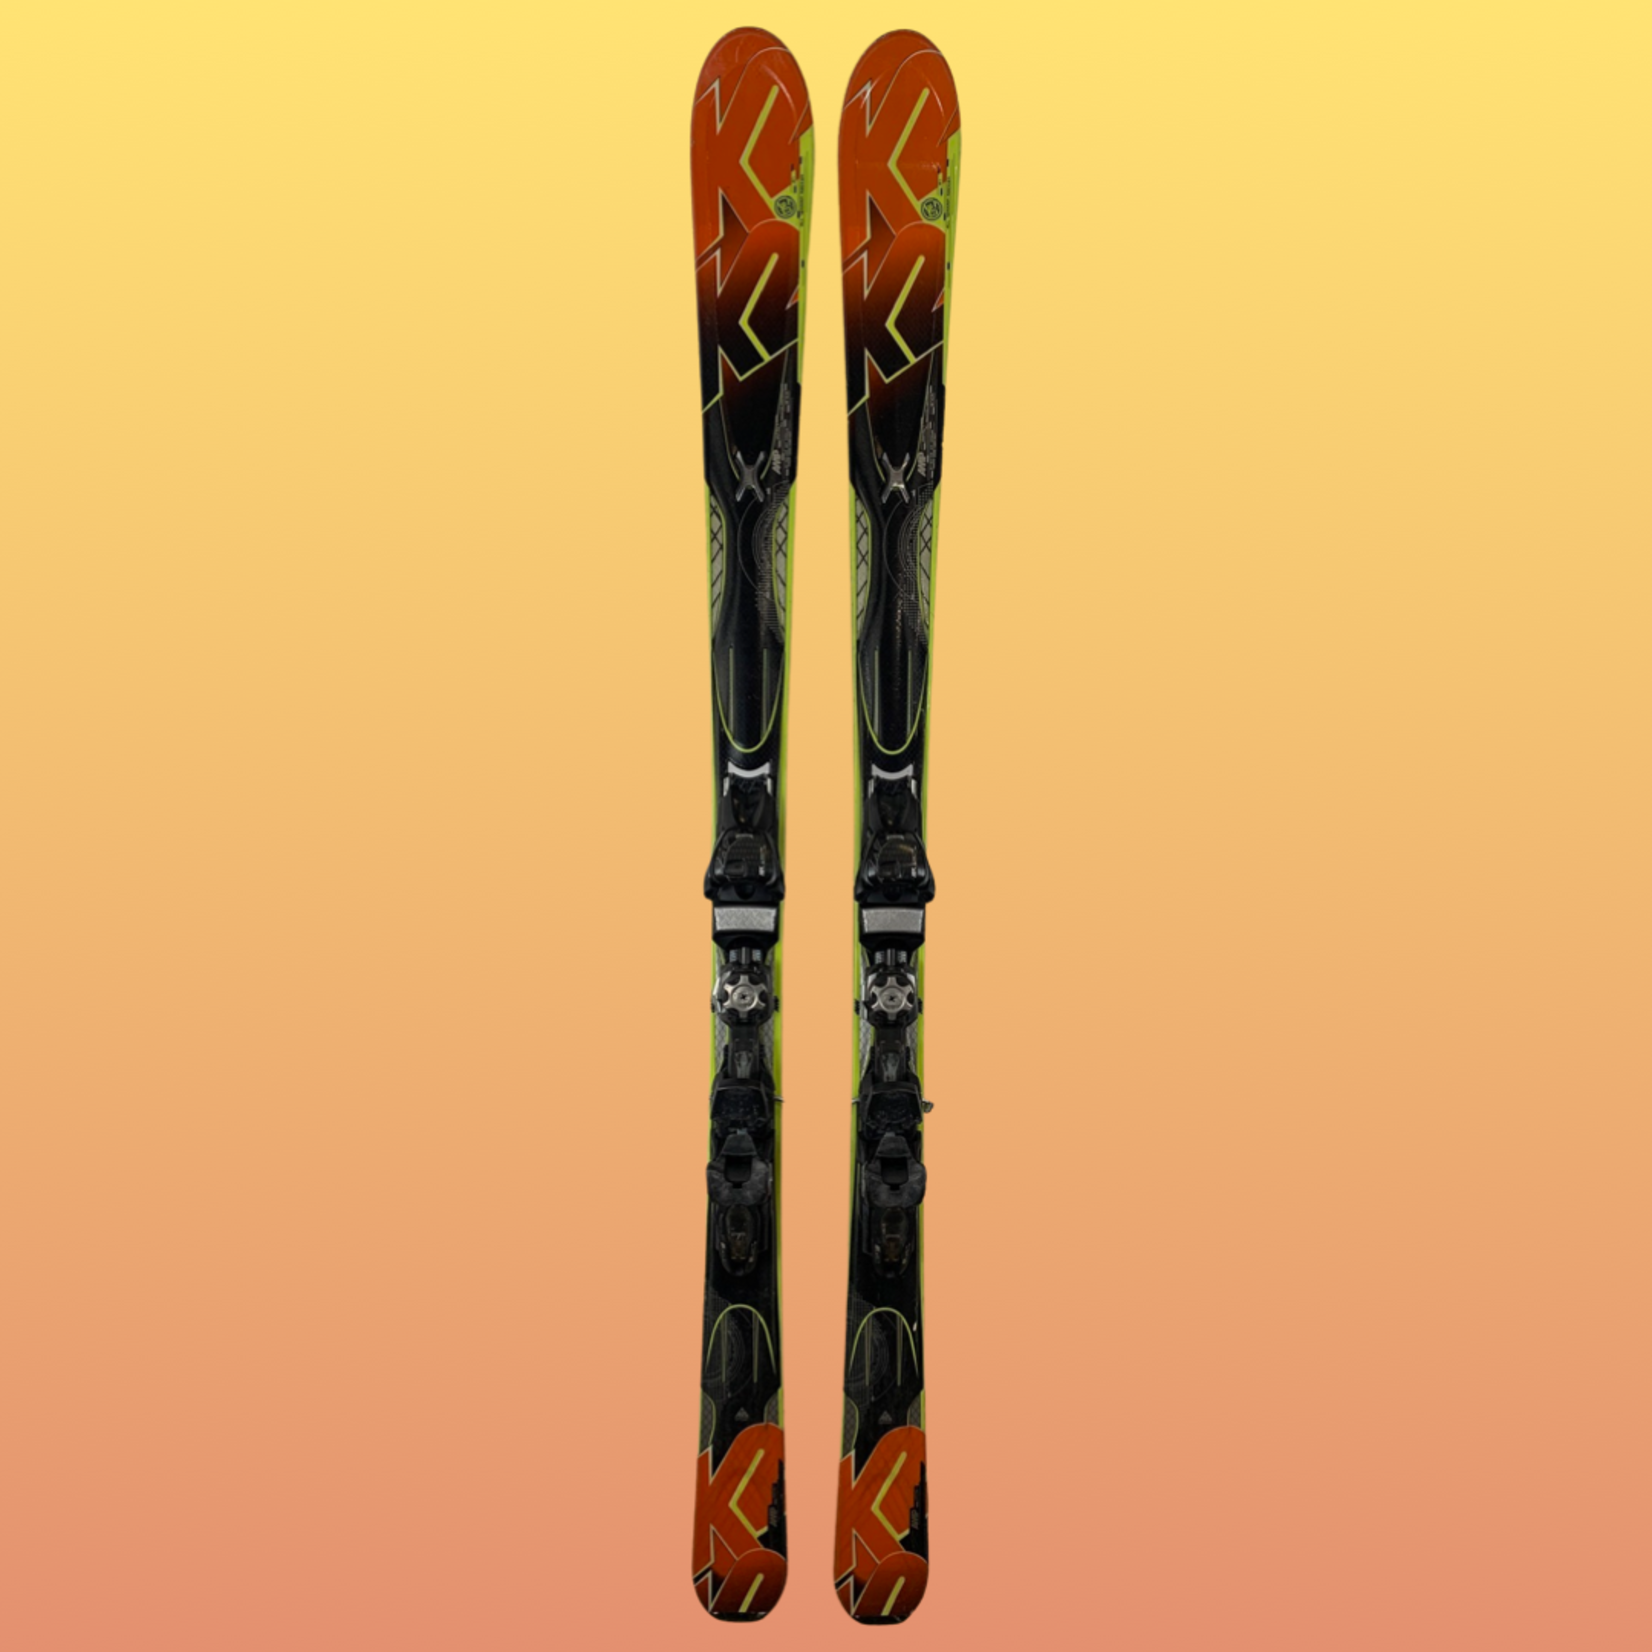 K2 K2 Amp Impact Skis + Marker MX 12.0 Demo Bindings, Size 167cm